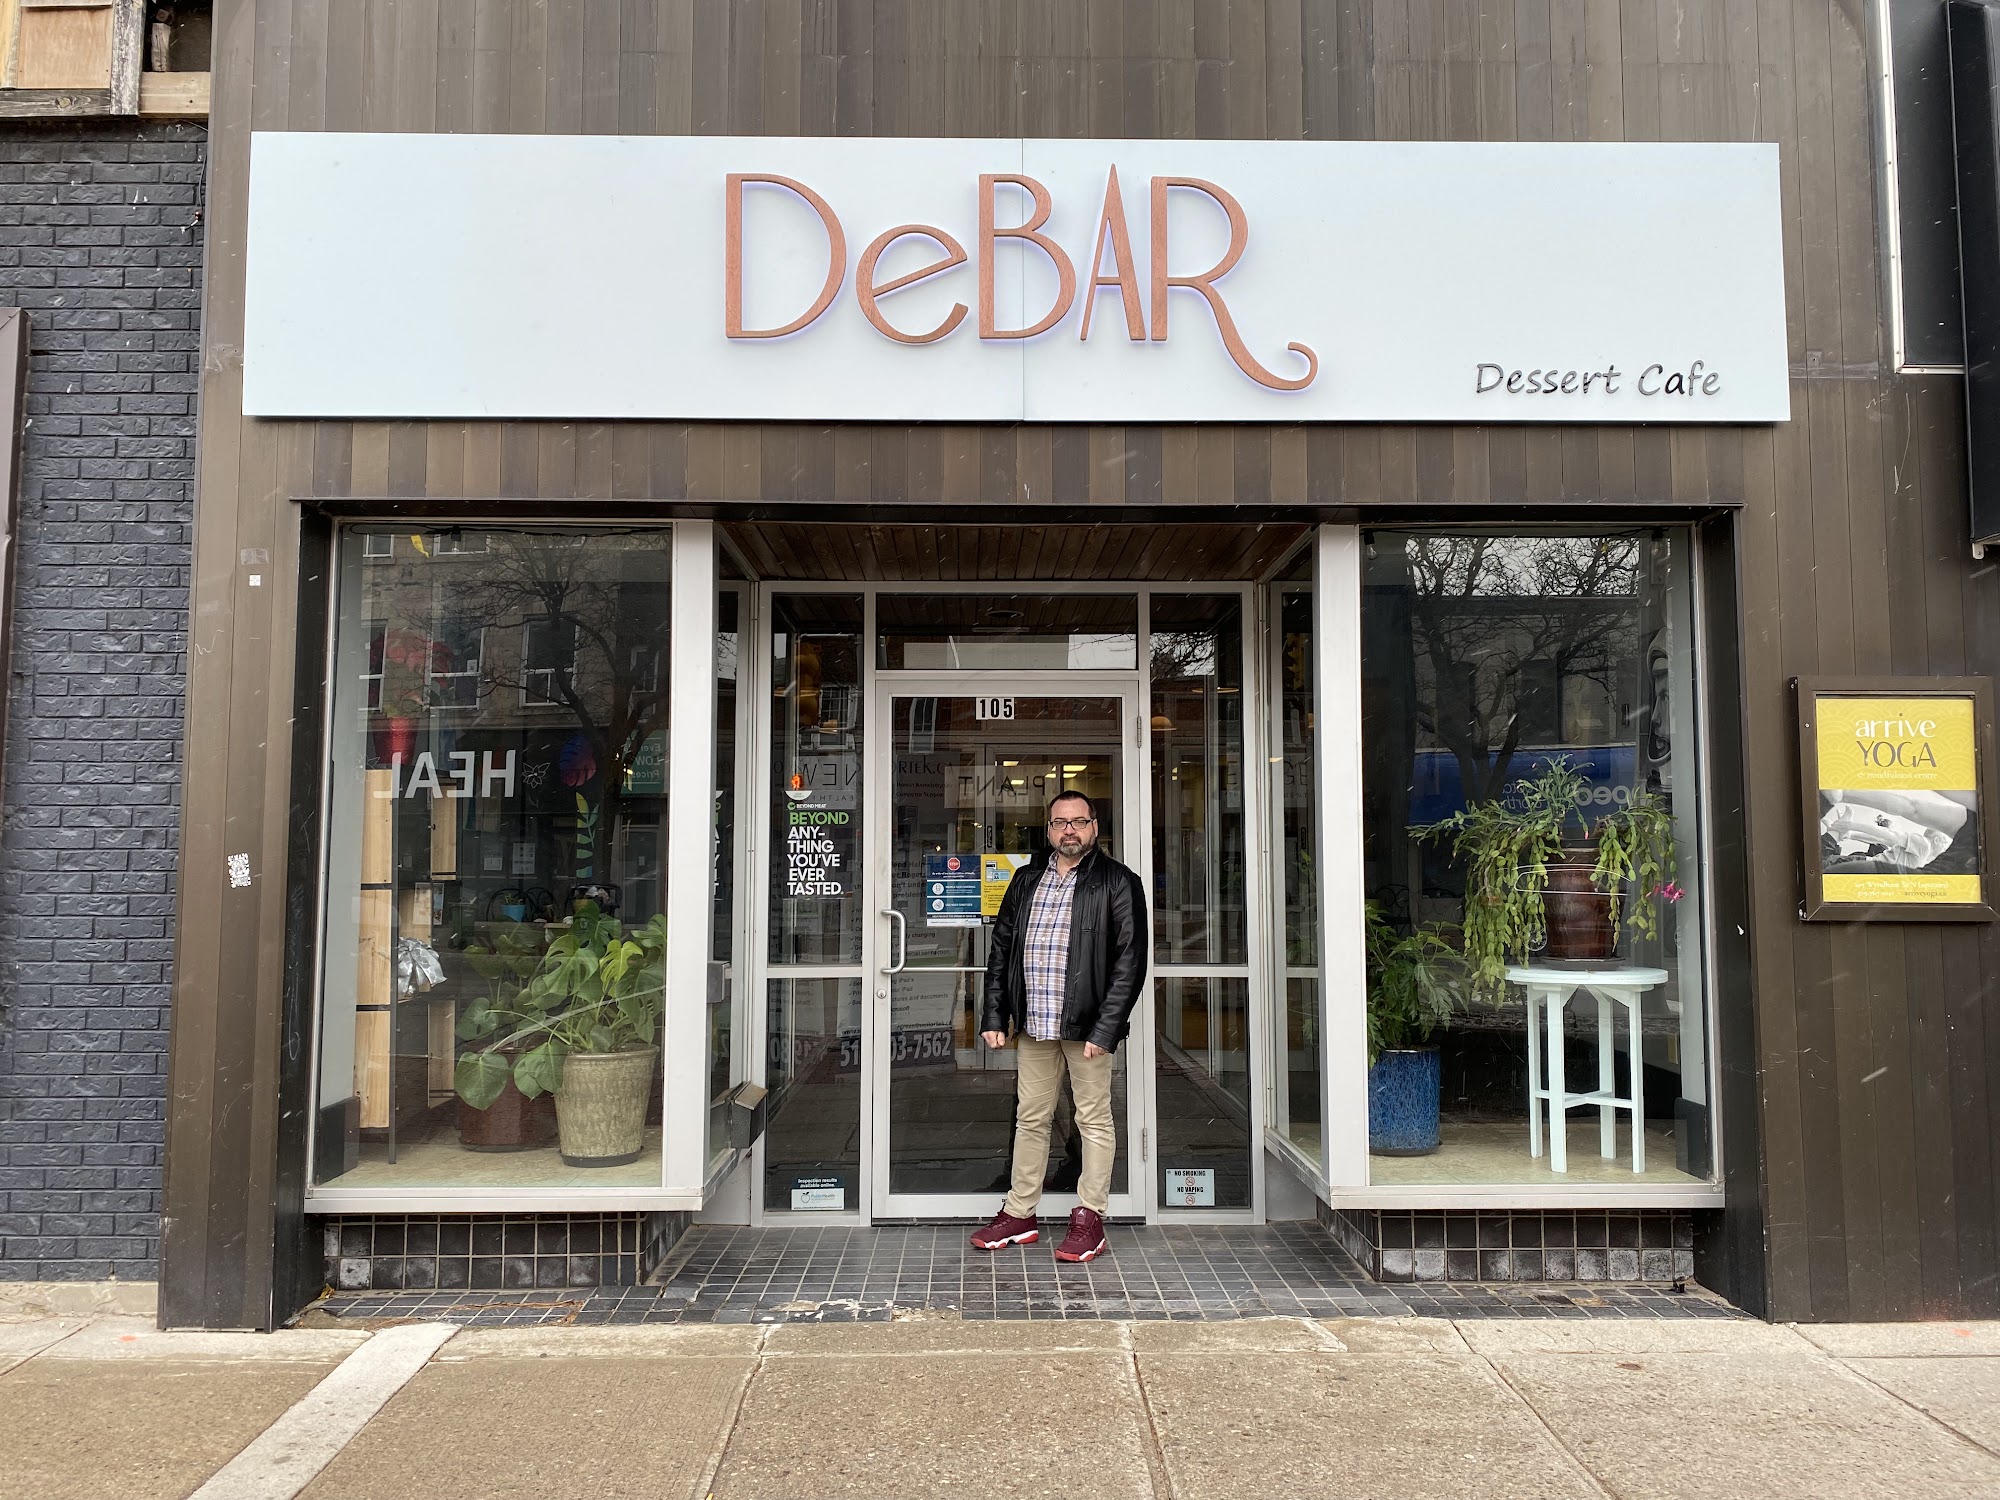 DeBAR Dessert Cafe